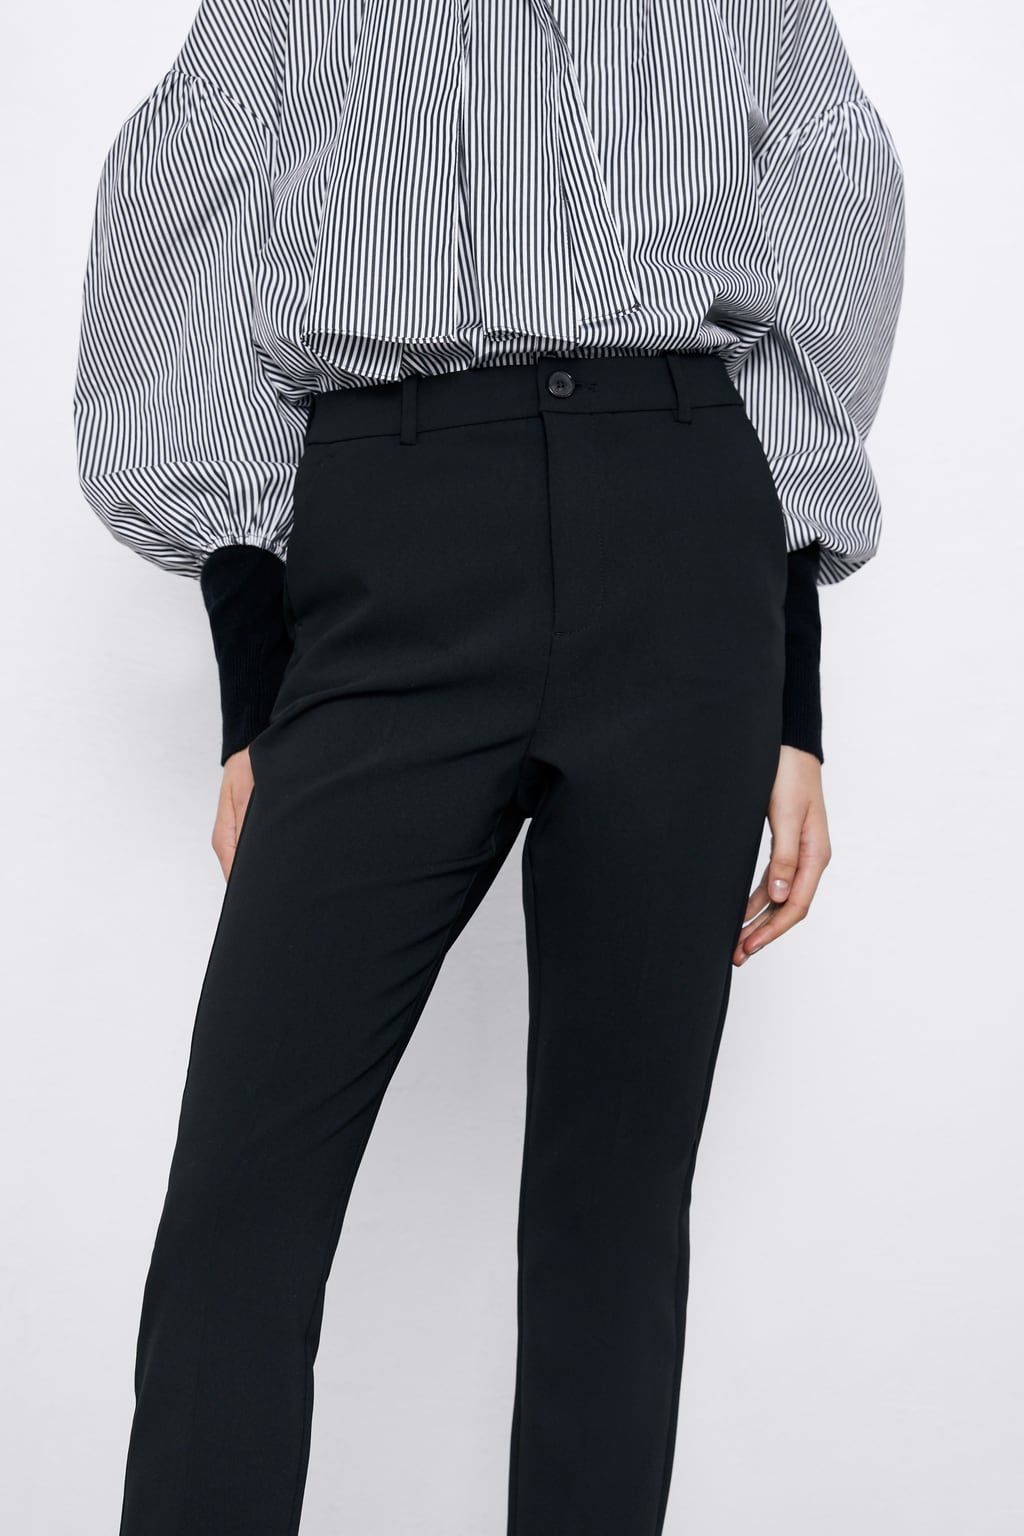 Moda Trajes Pantalones de vestir Zara Woman Pantal\u00f3n de vestir negro moteado look casual 